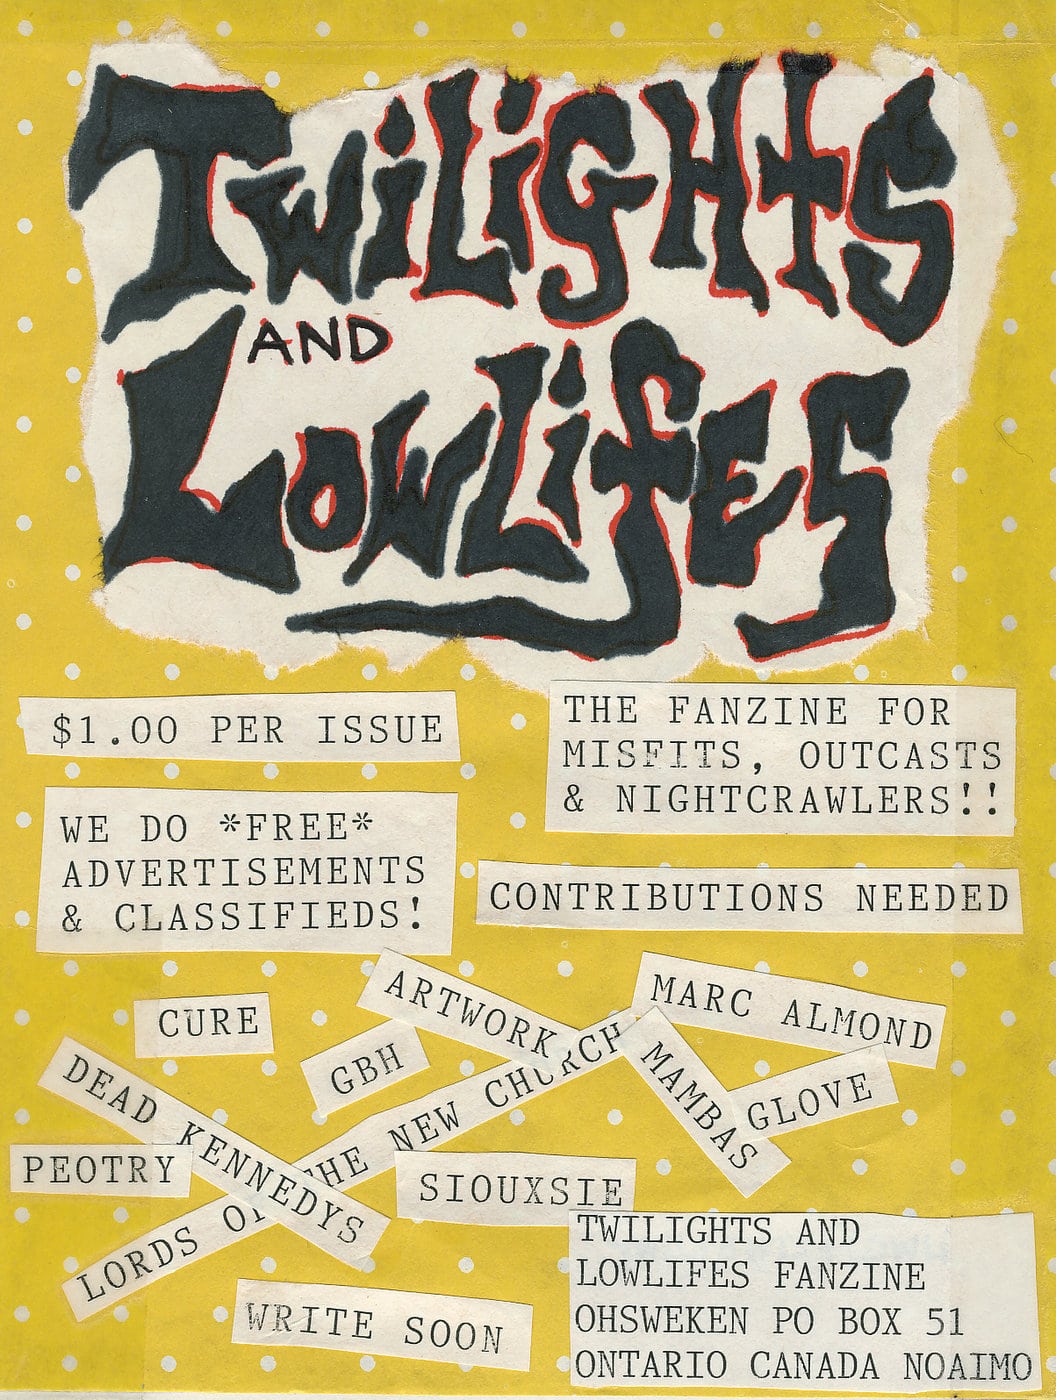 Twilights and Lowlifes fanzine (c1986)